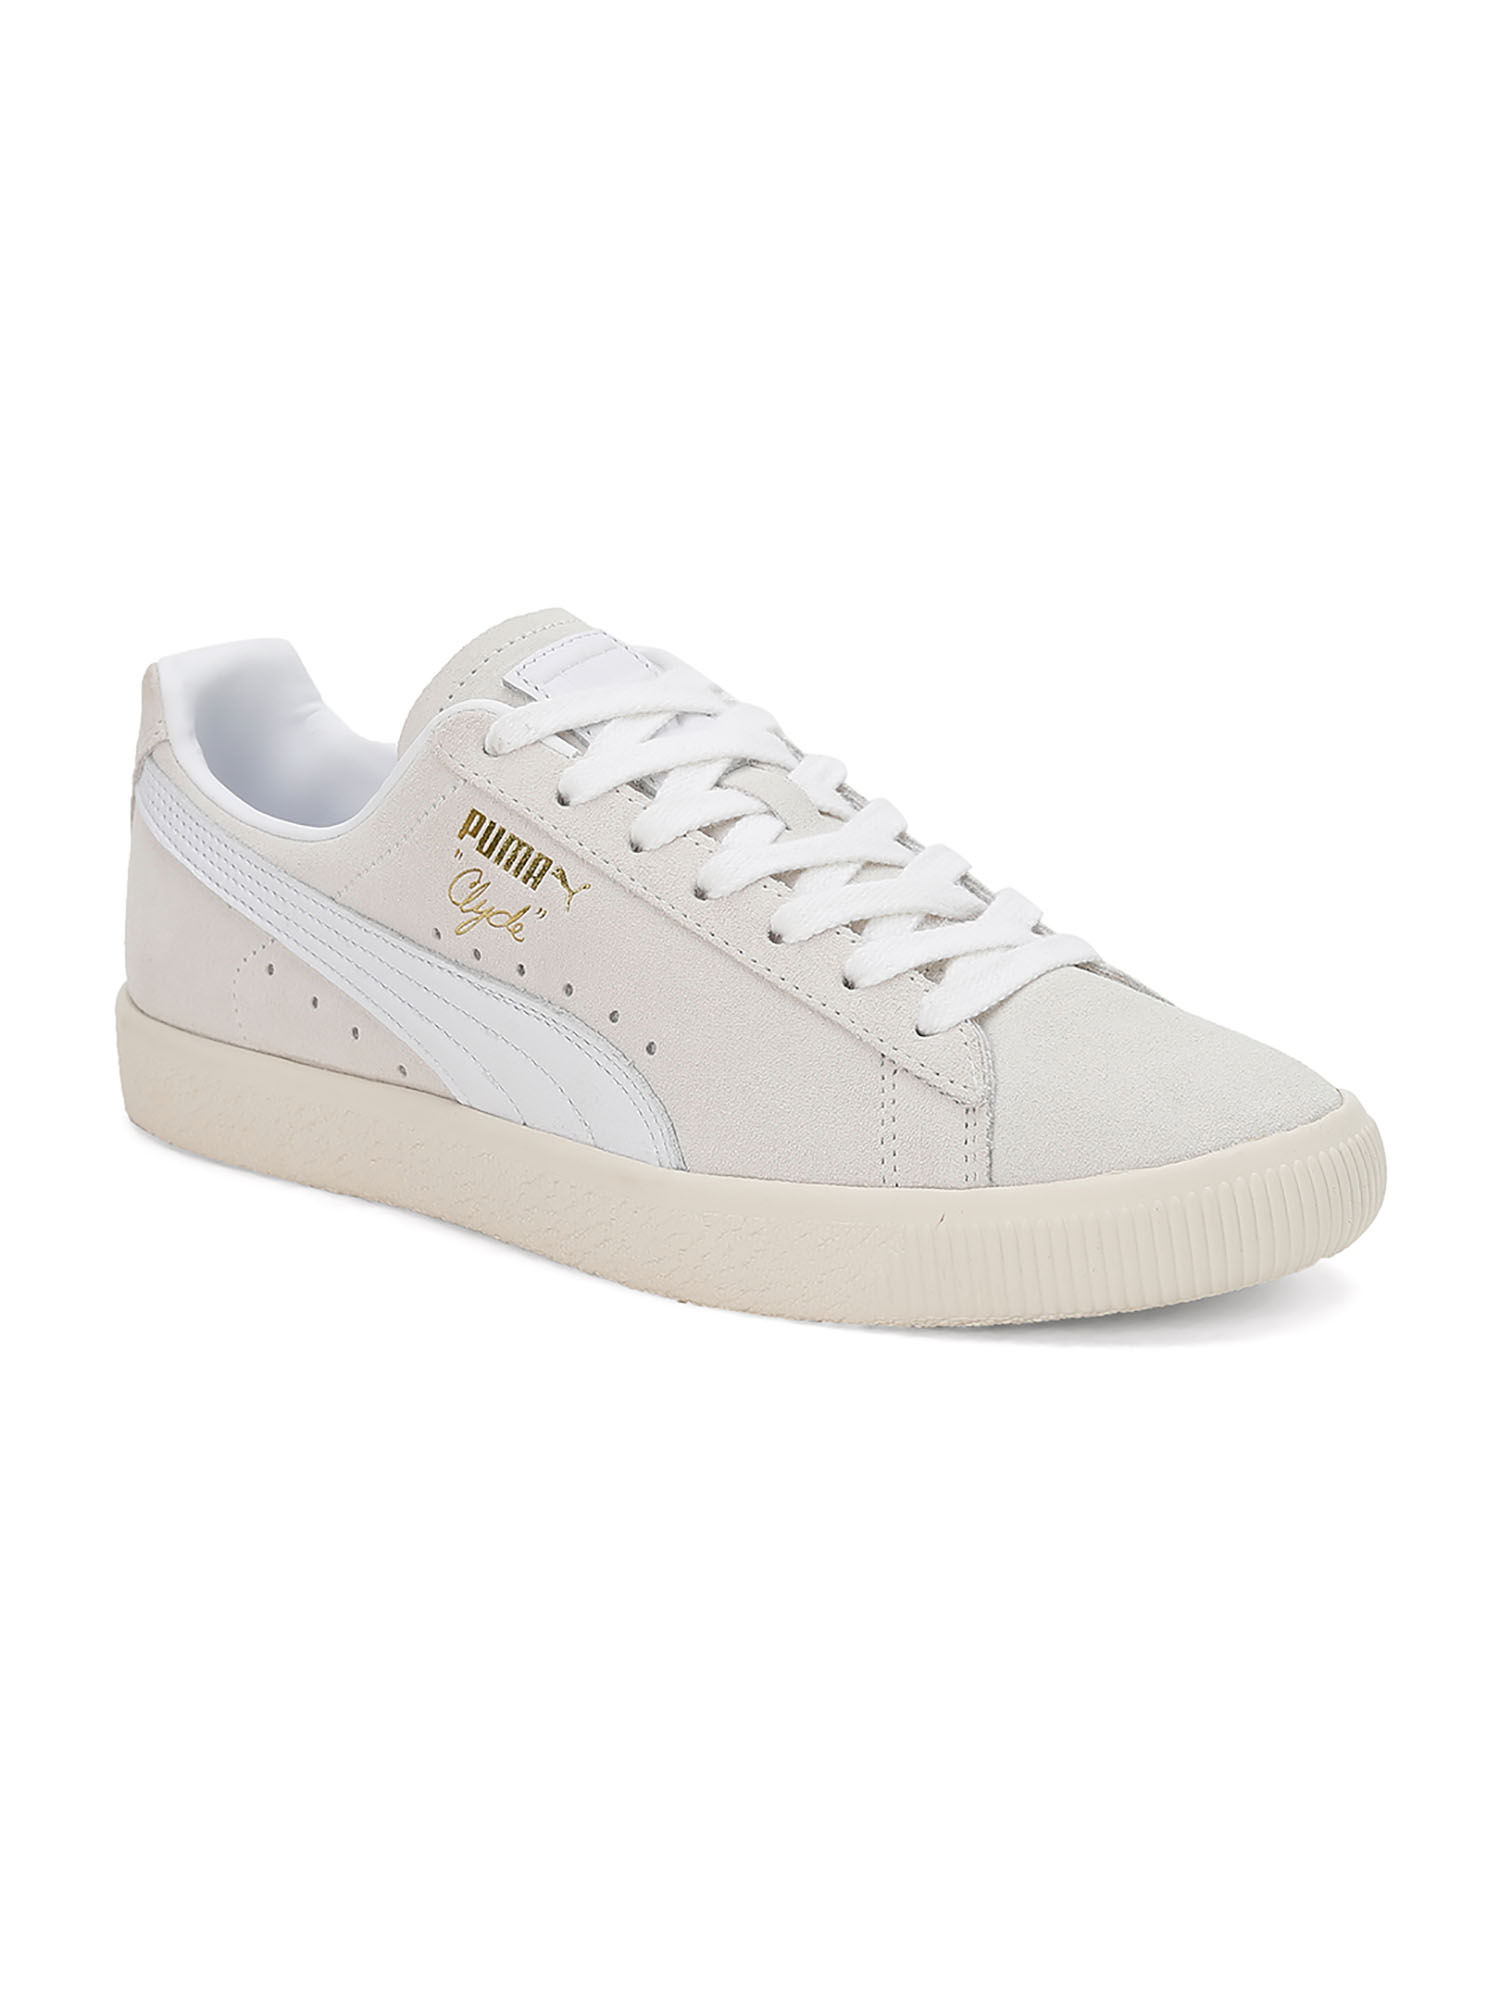 PUMA Club Black White Off-white Suede Sneakers 381111-02 Mens Size 12 NEW |  eBay